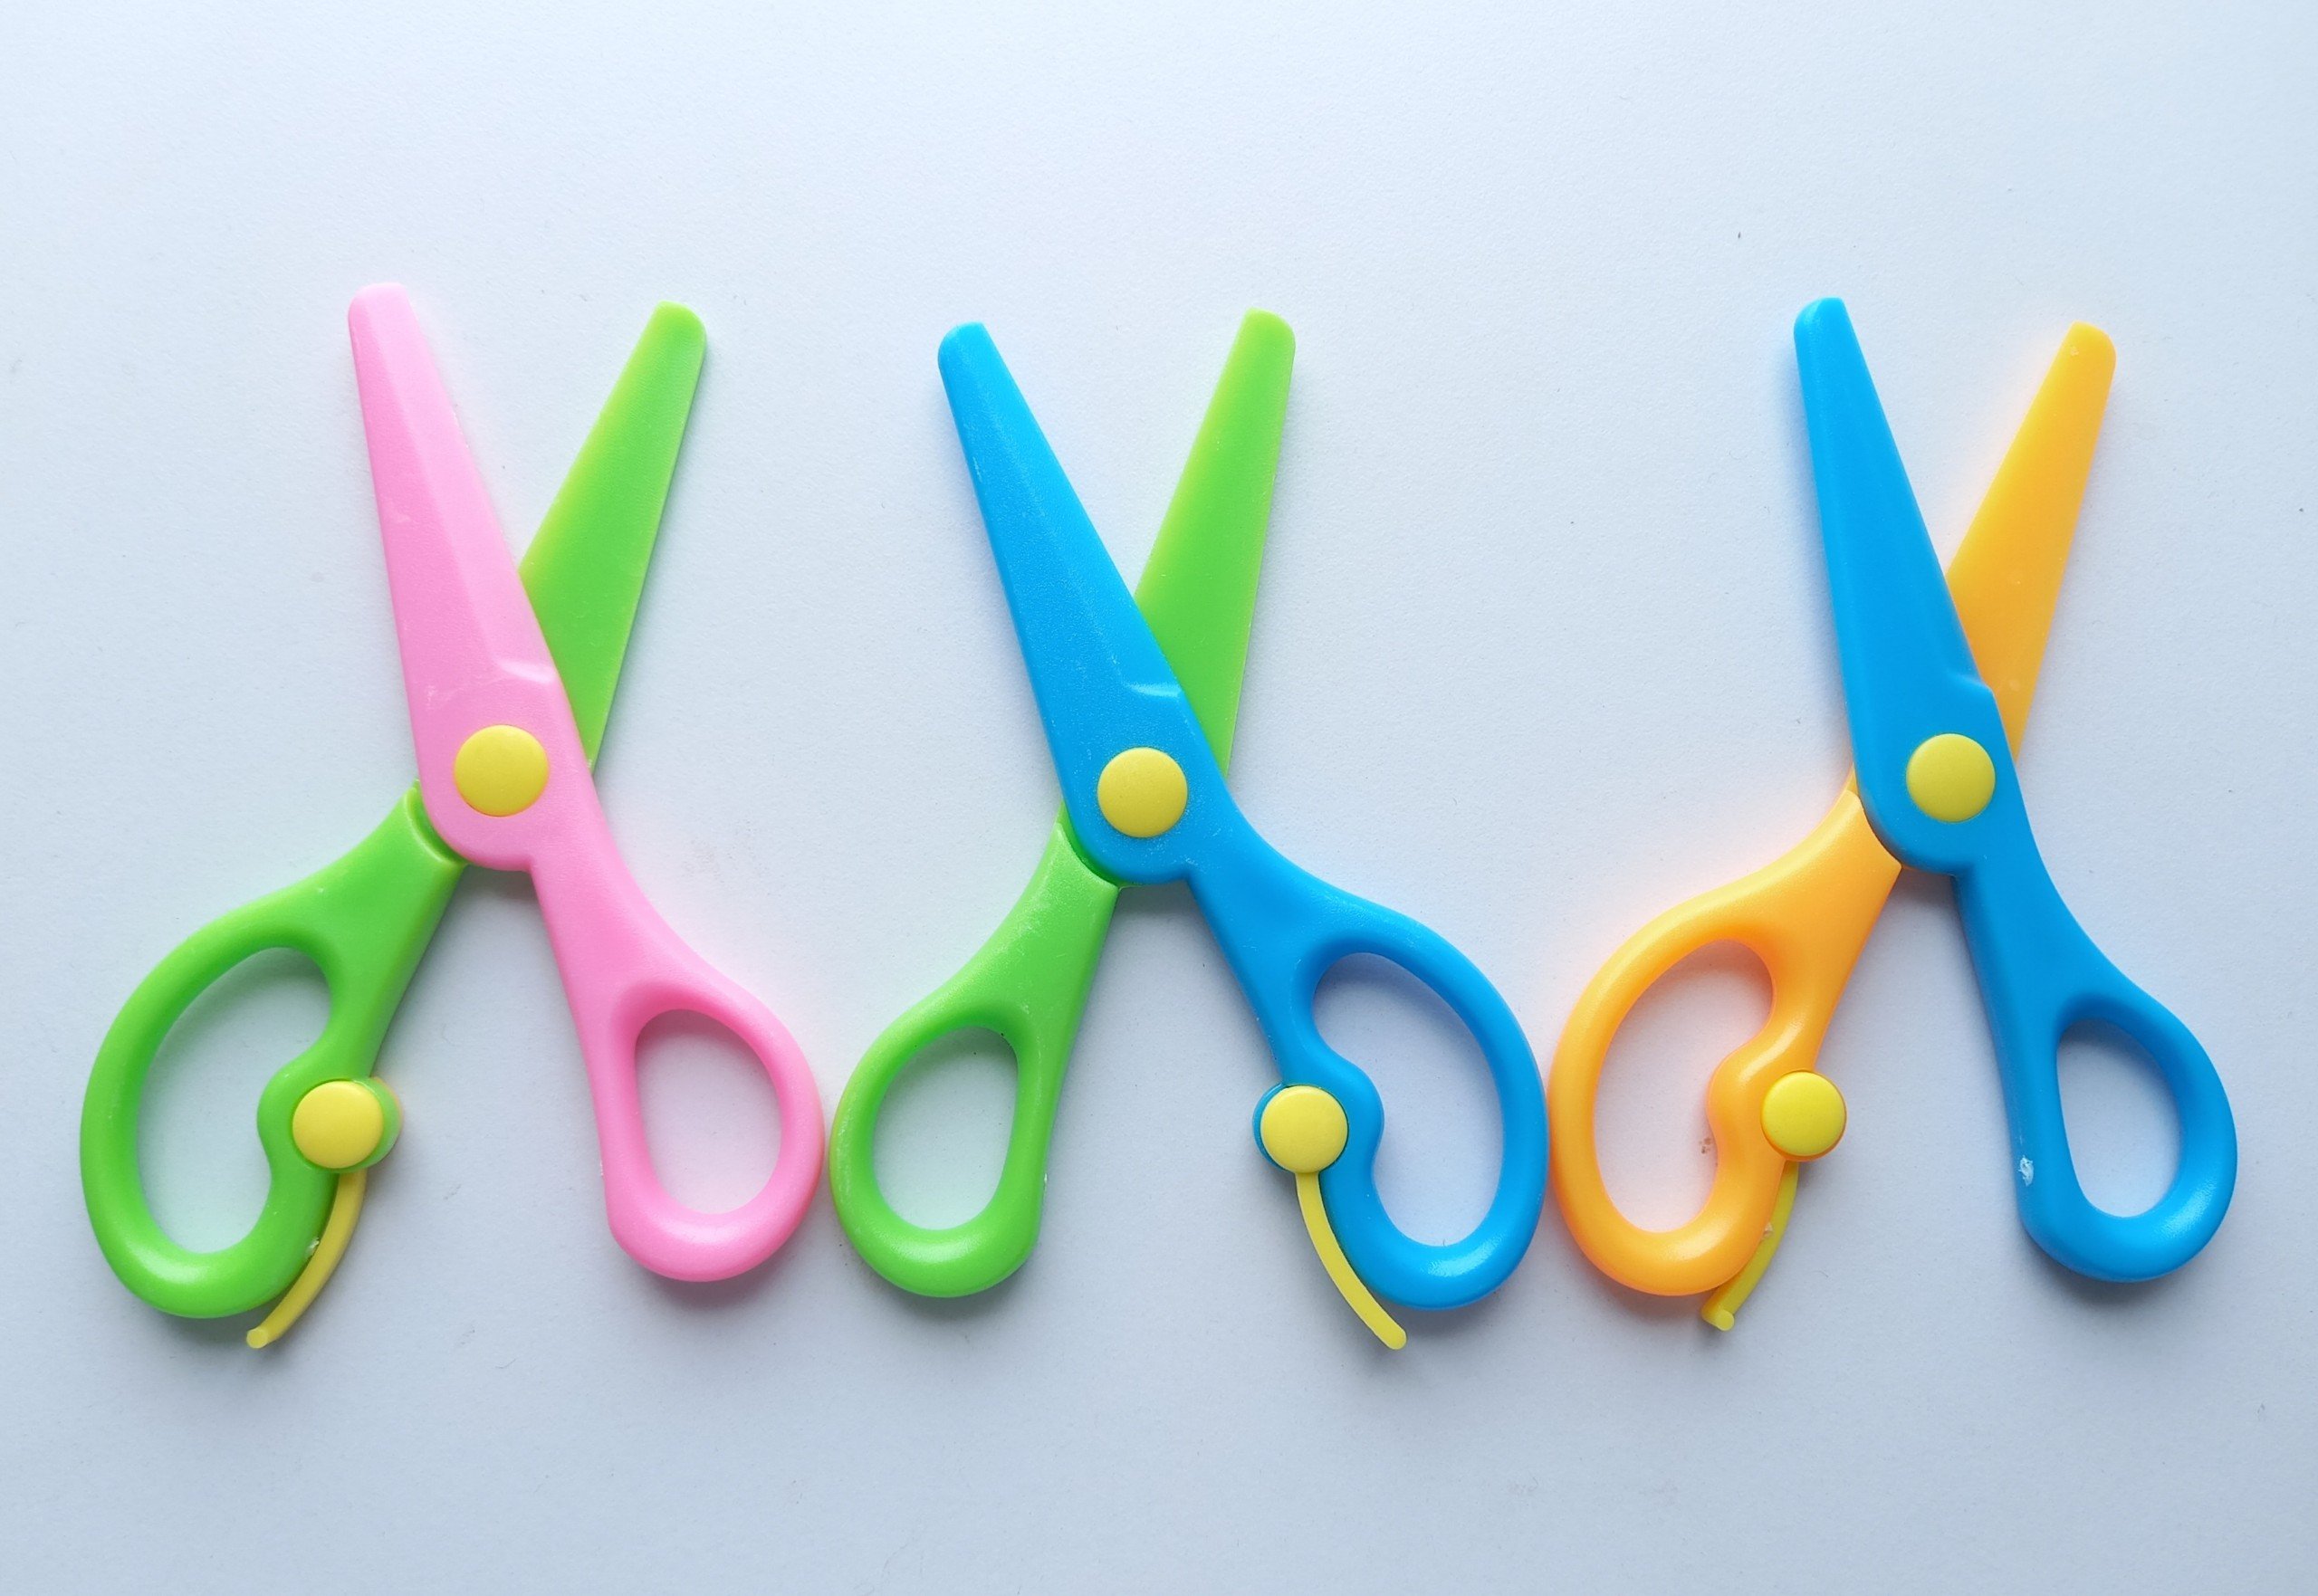 Playdough - scissors